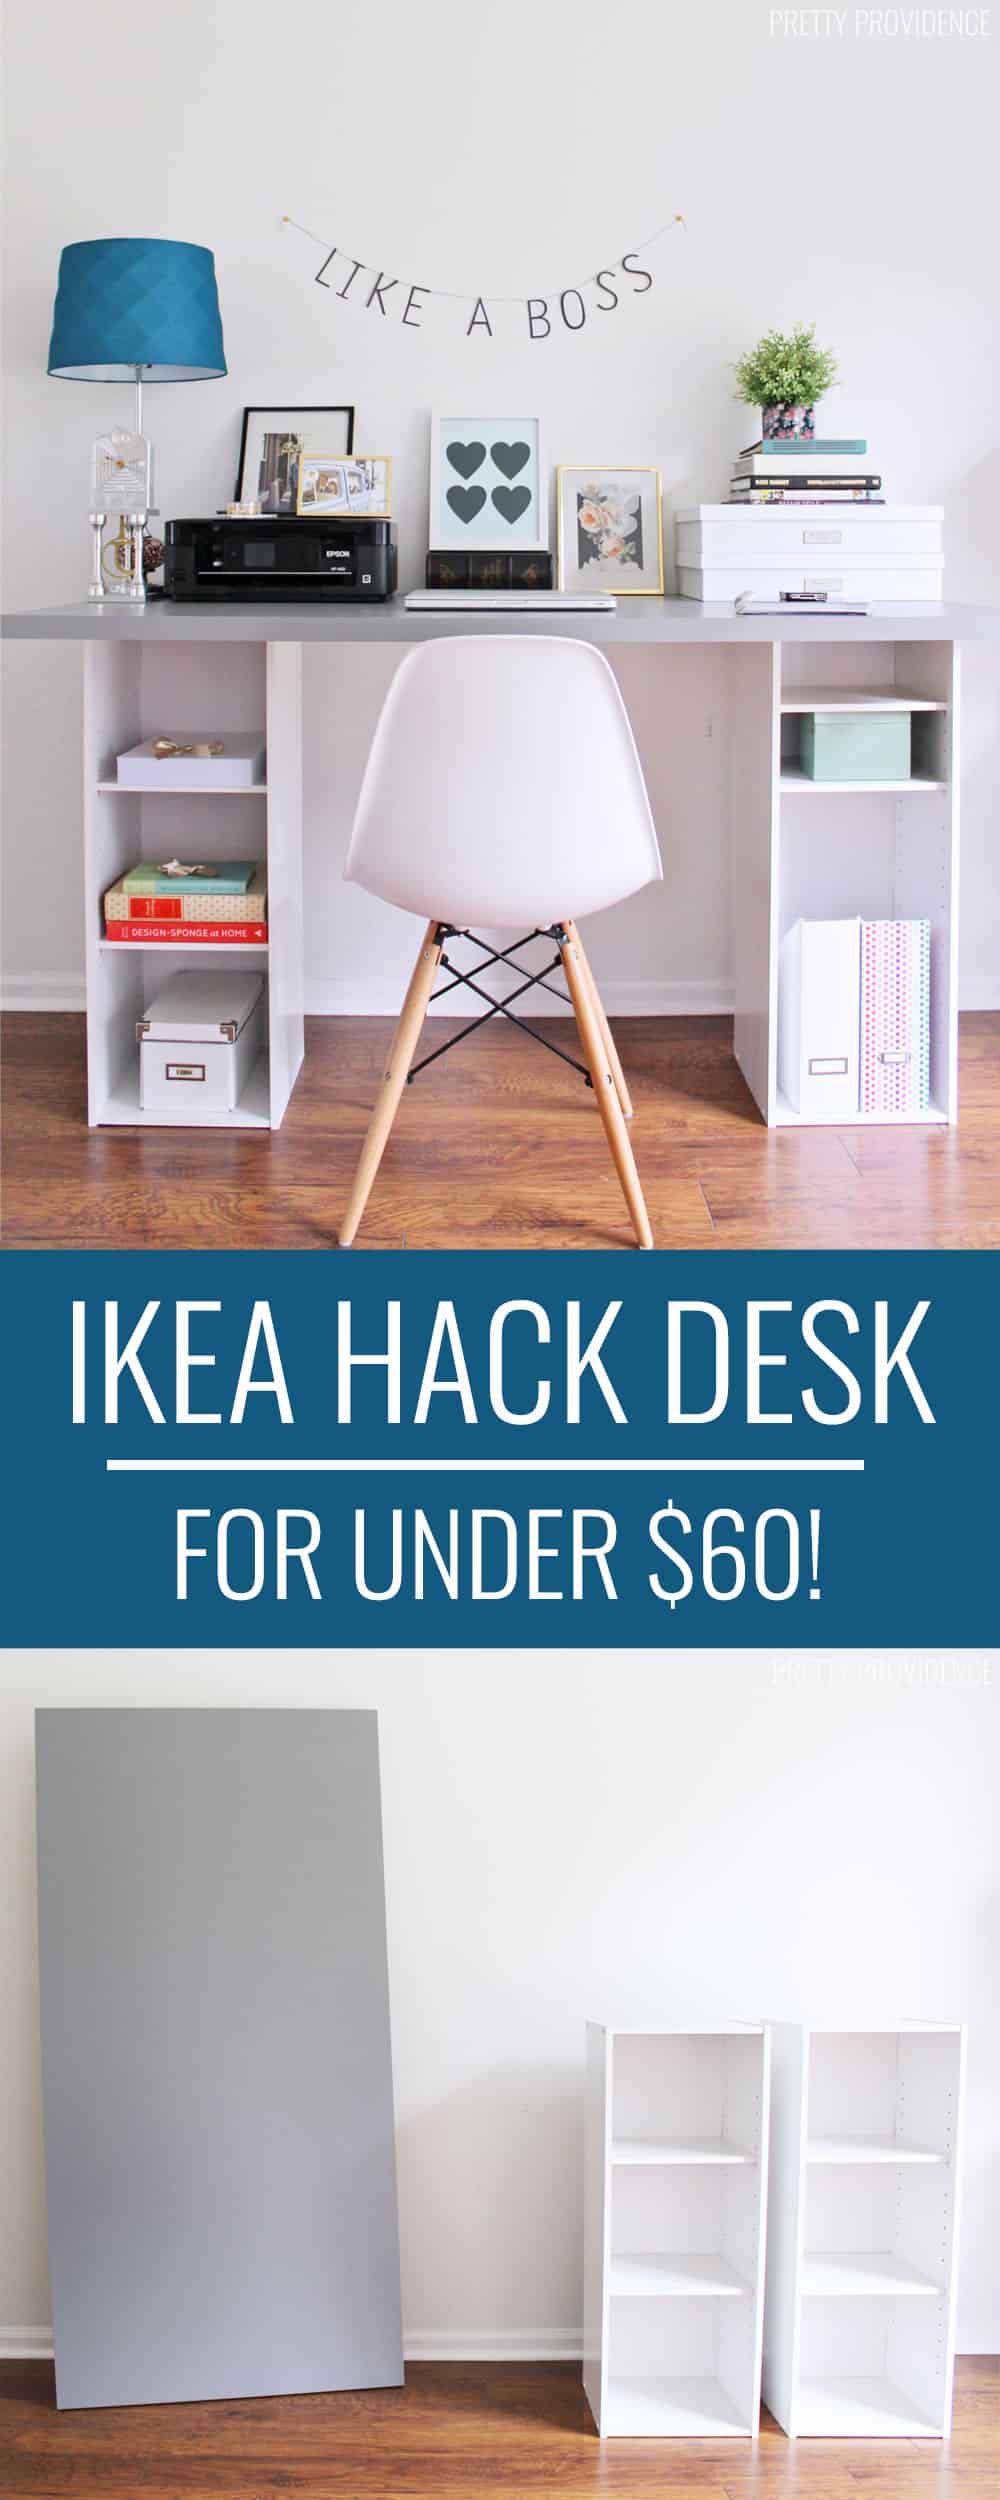 DIY IKEA Desk Hack